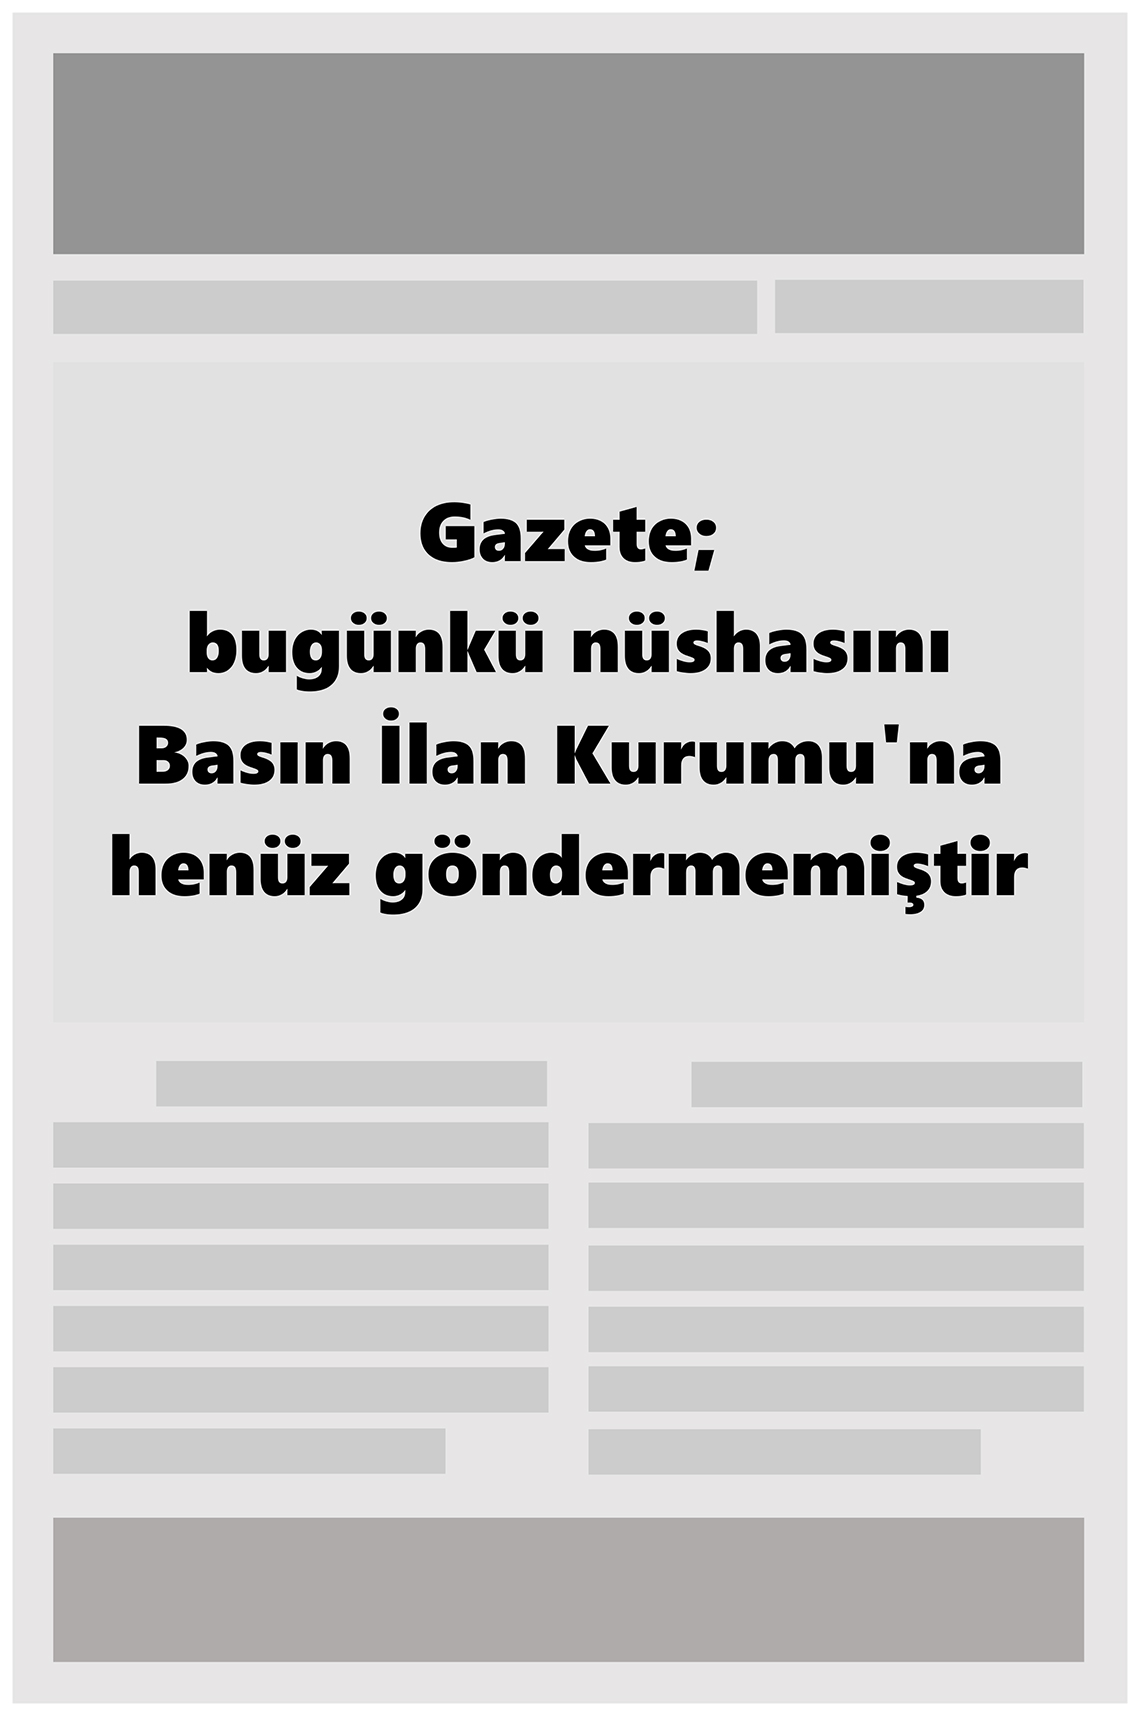 15 Ocak 2022 Balıkesir Politika Gazete Manşeti